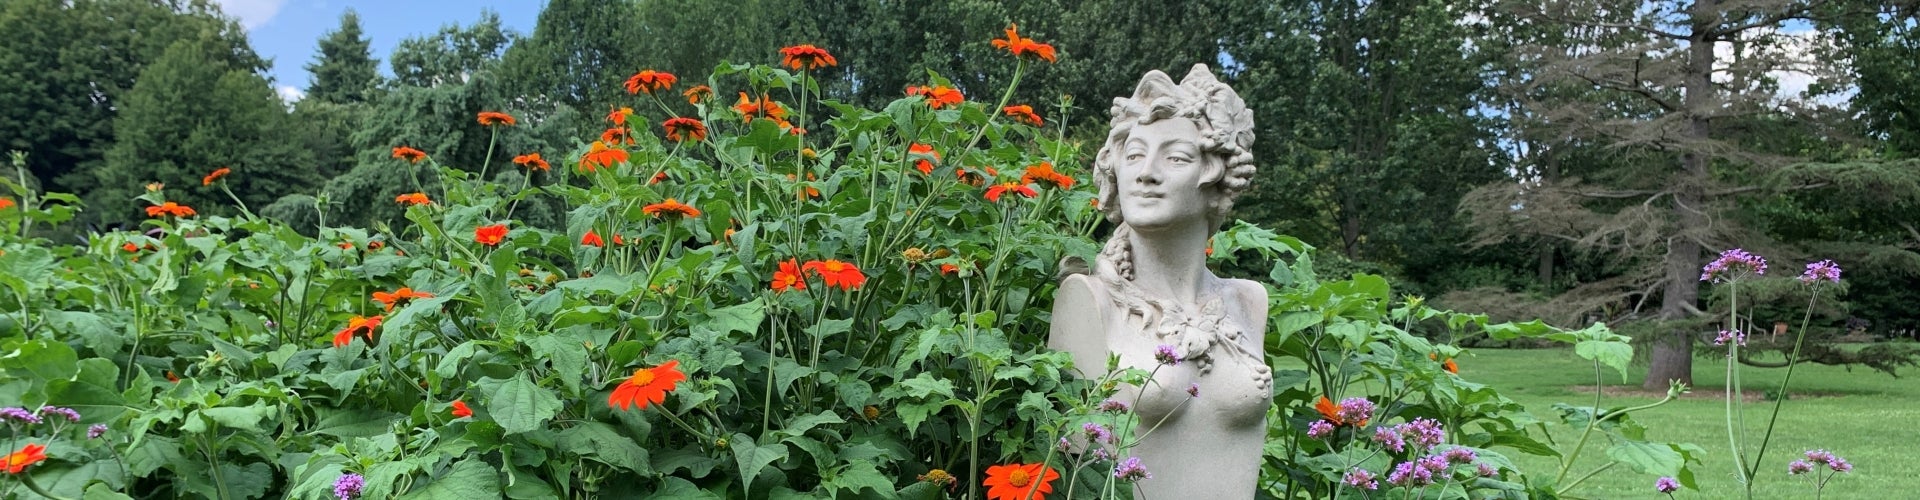 A statue of a Greek nymph in a flowering garden.